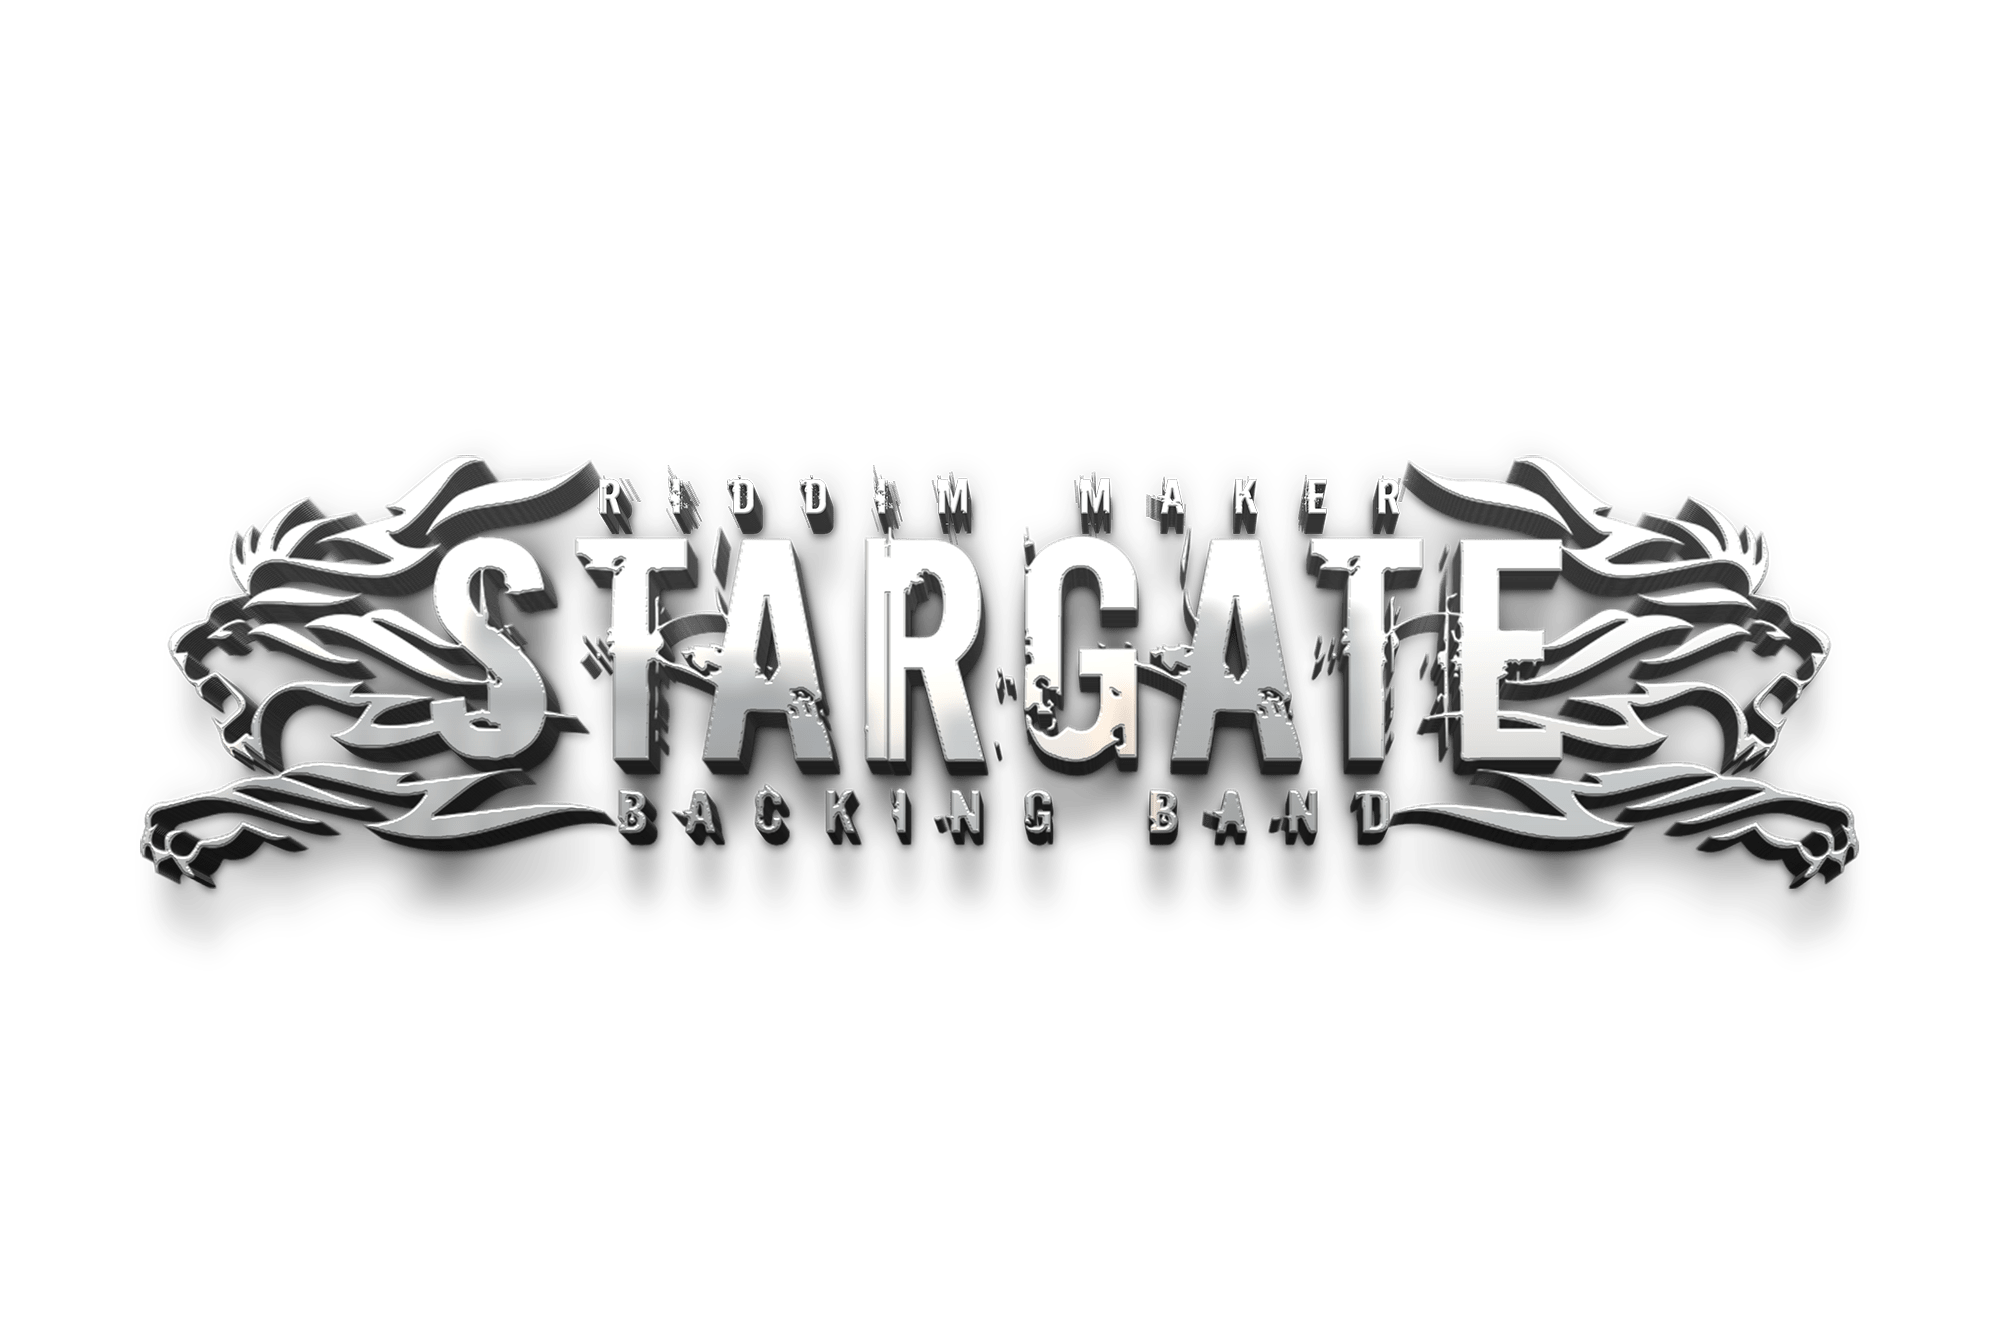 Stargate Backing Band